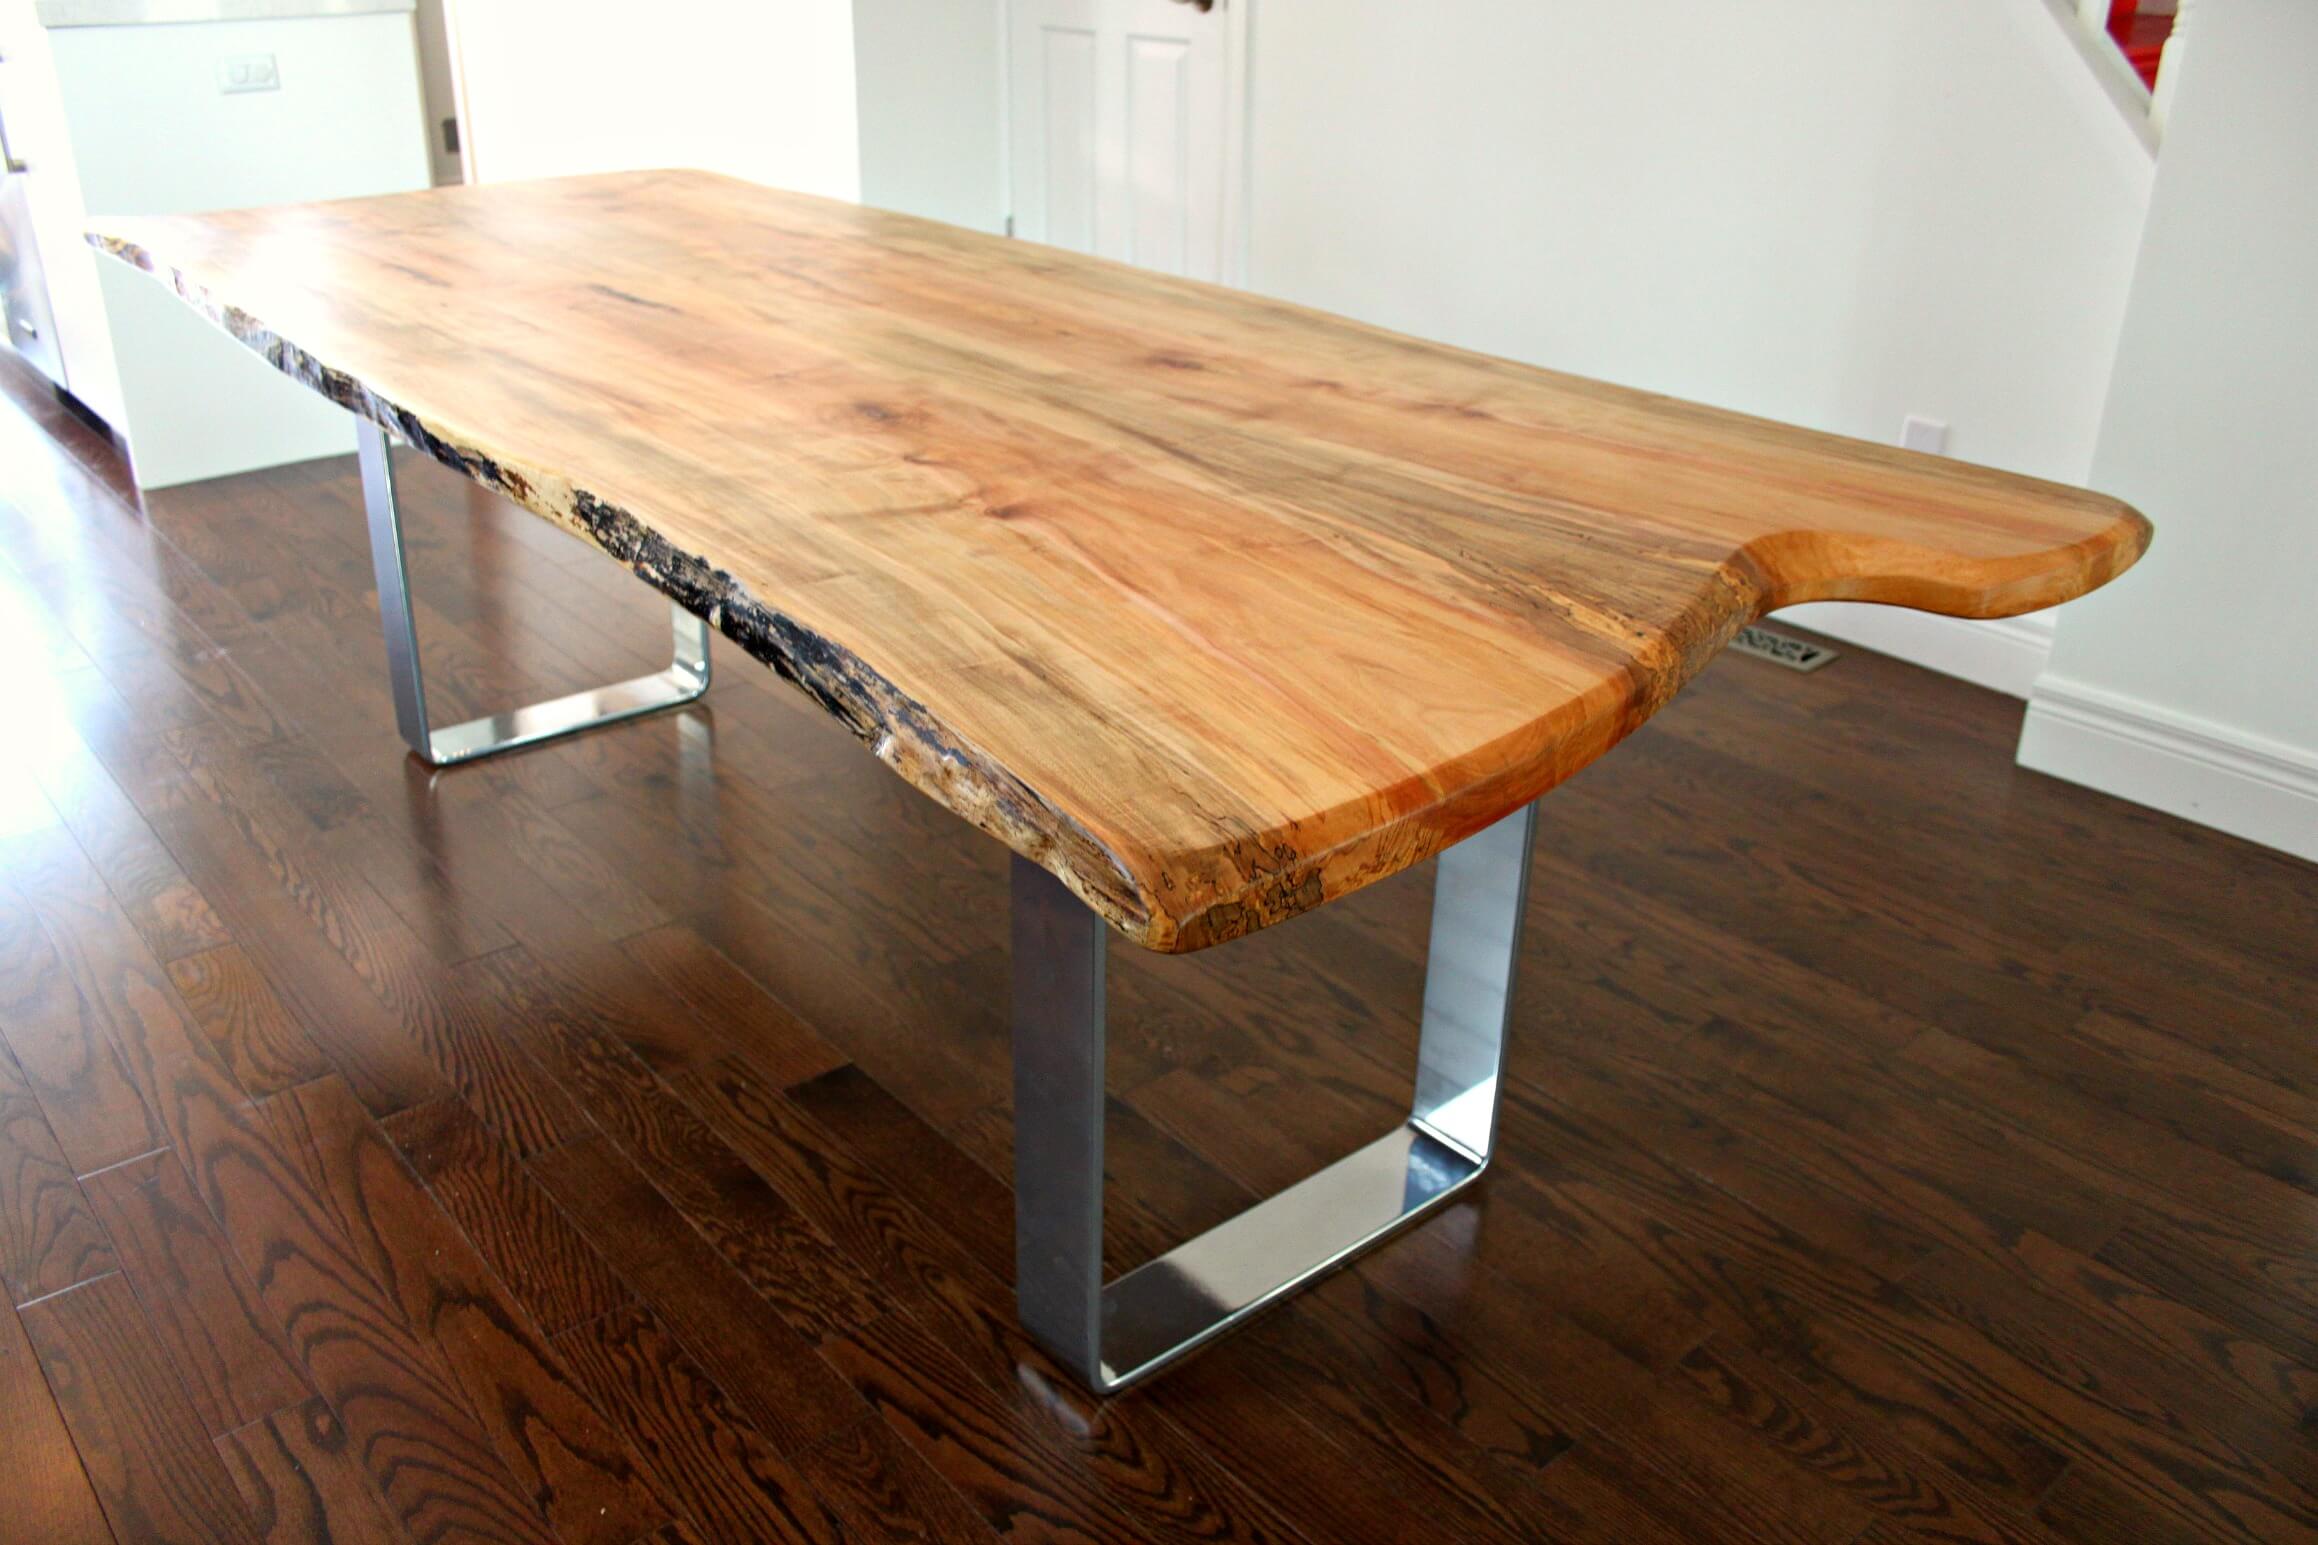 Live edge maple table with modern chrome 'u' base